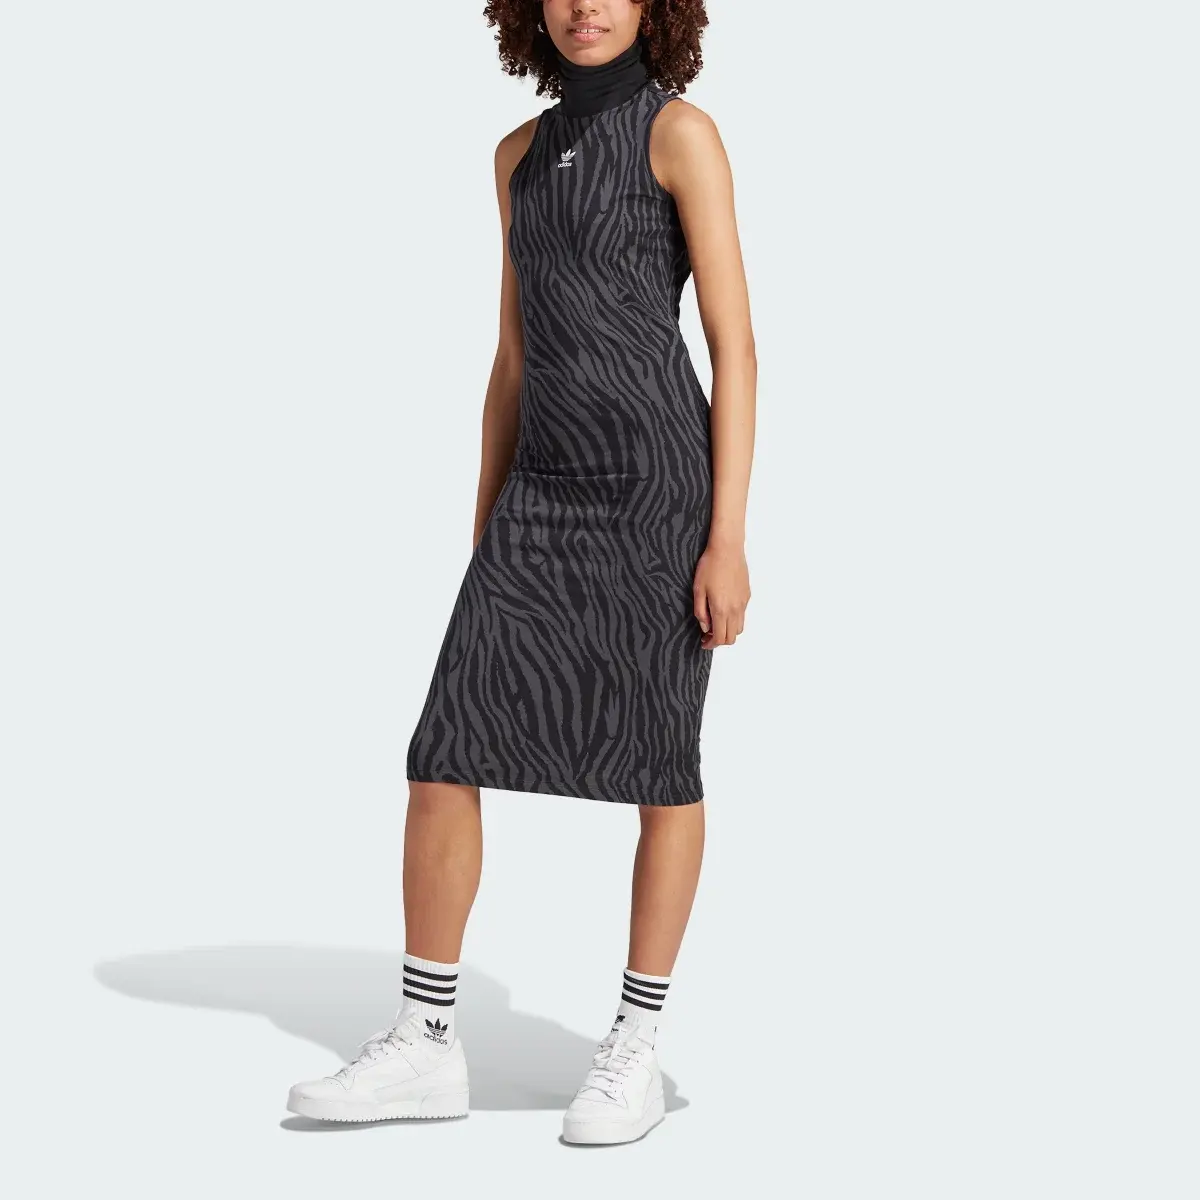 Adidas Allover Zebra Animal Print Dress. 1